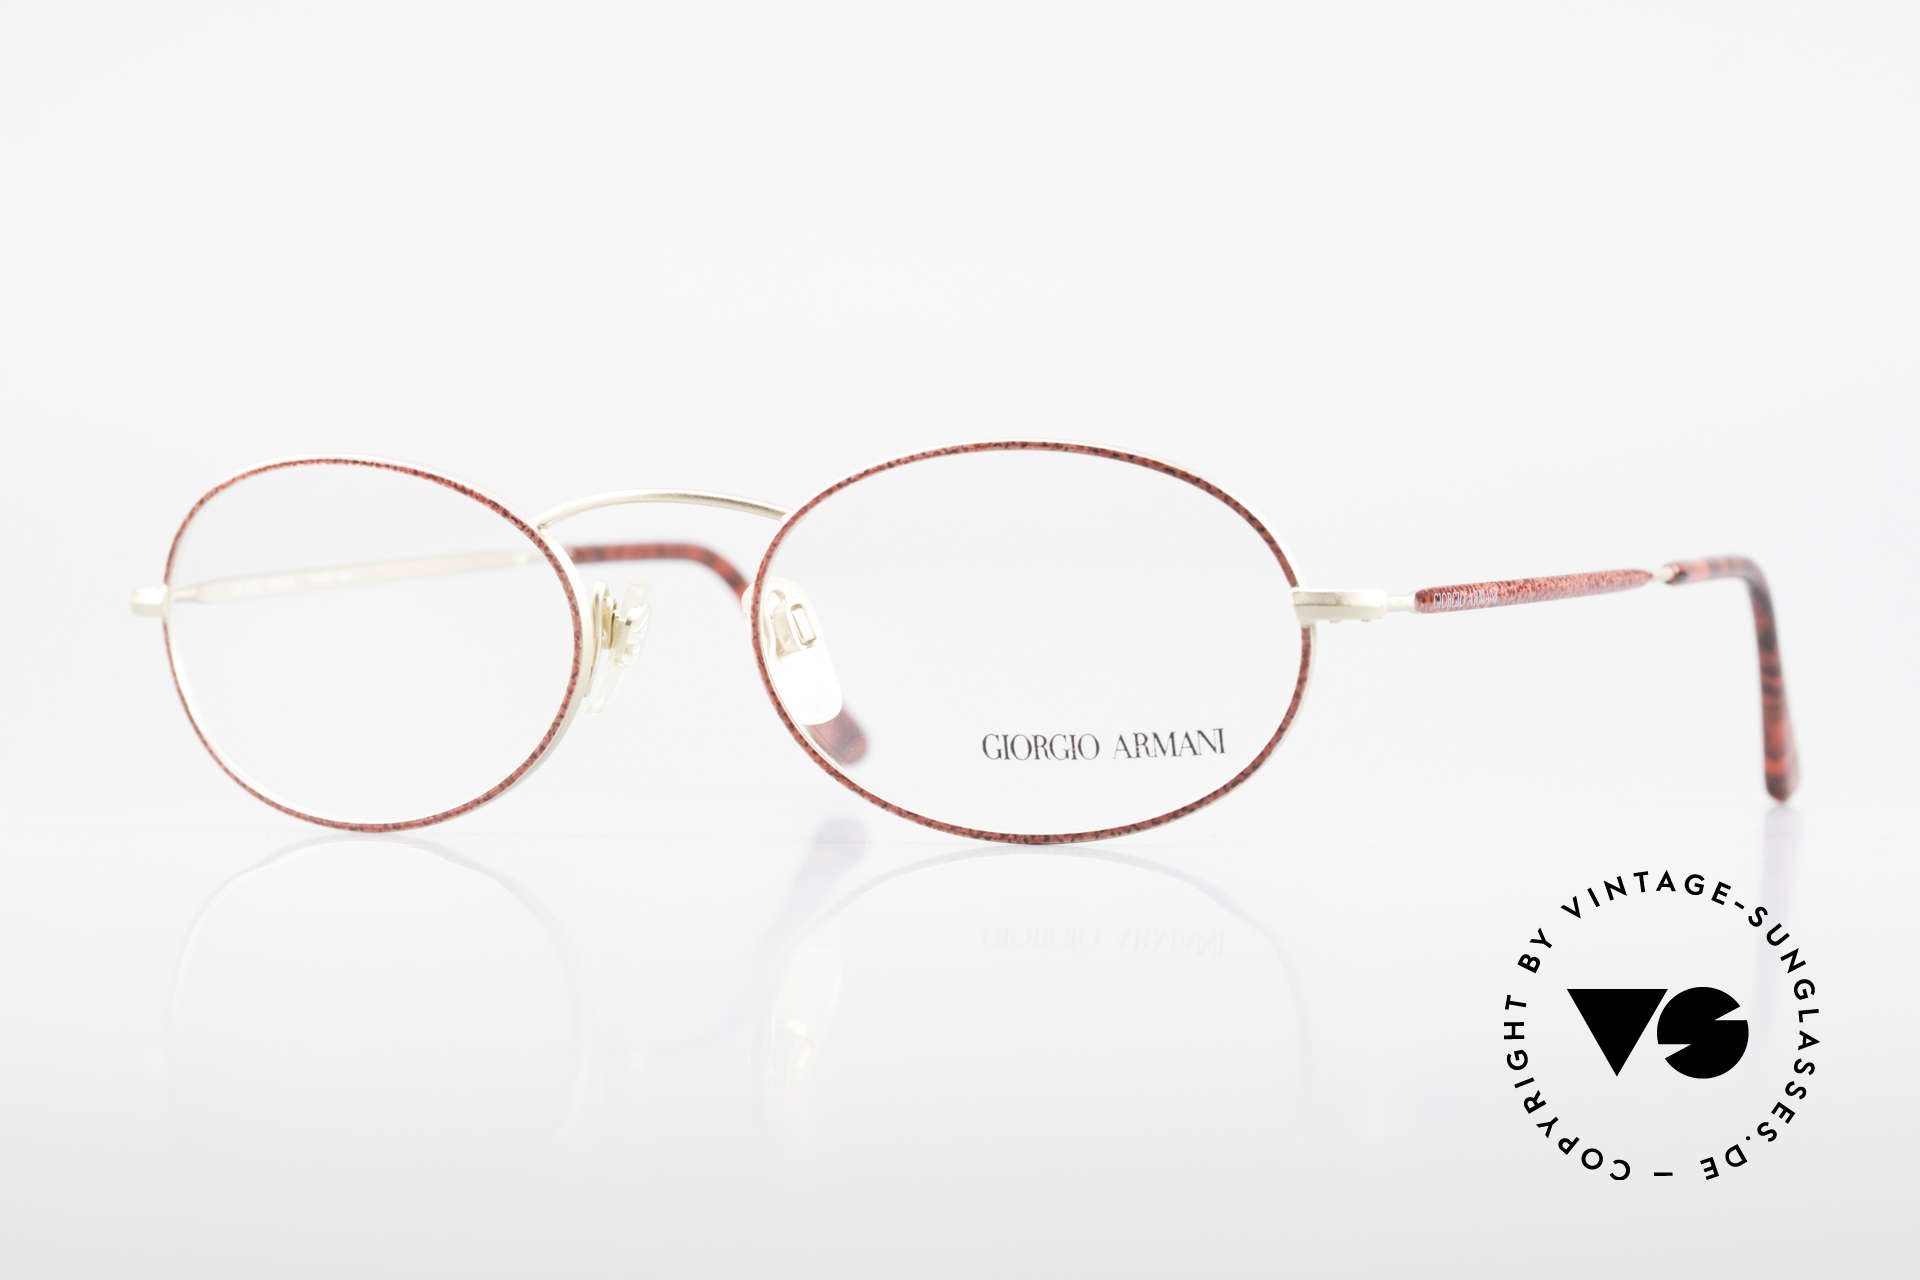 Giorgio Armani 125 Oval 80's Vintage Glasses, vintage designer eyeglasses by GIORGIO ARMANI, Made for Women